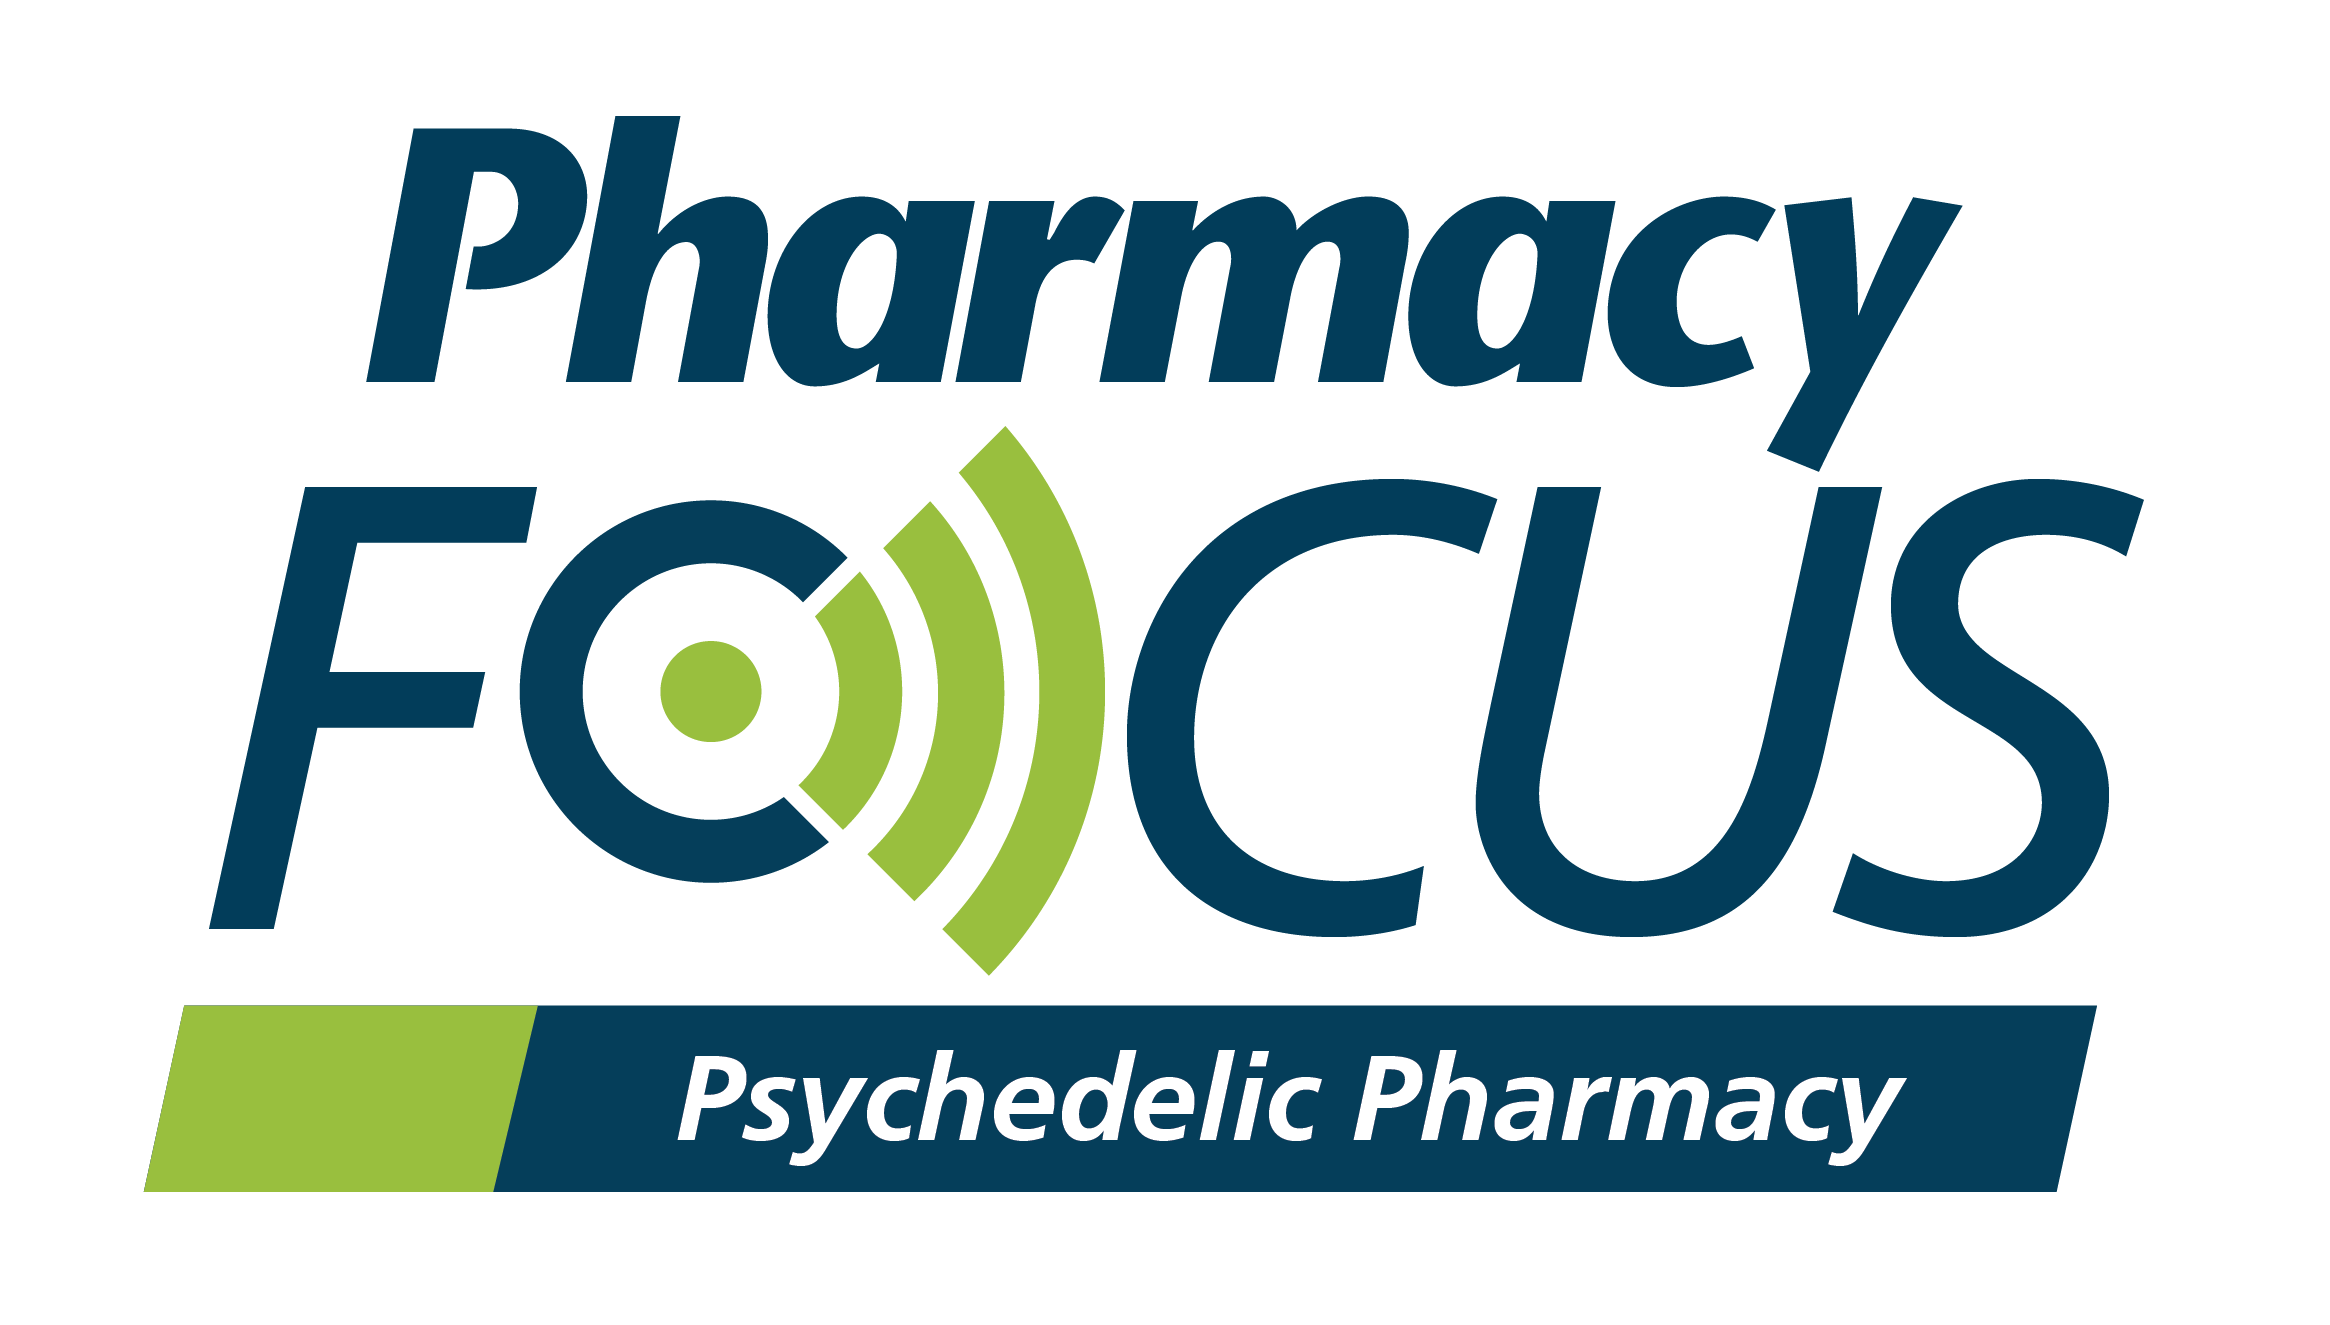 Pharmacy Focus: Psychedelic Pharmacy - The Future of Ketamine